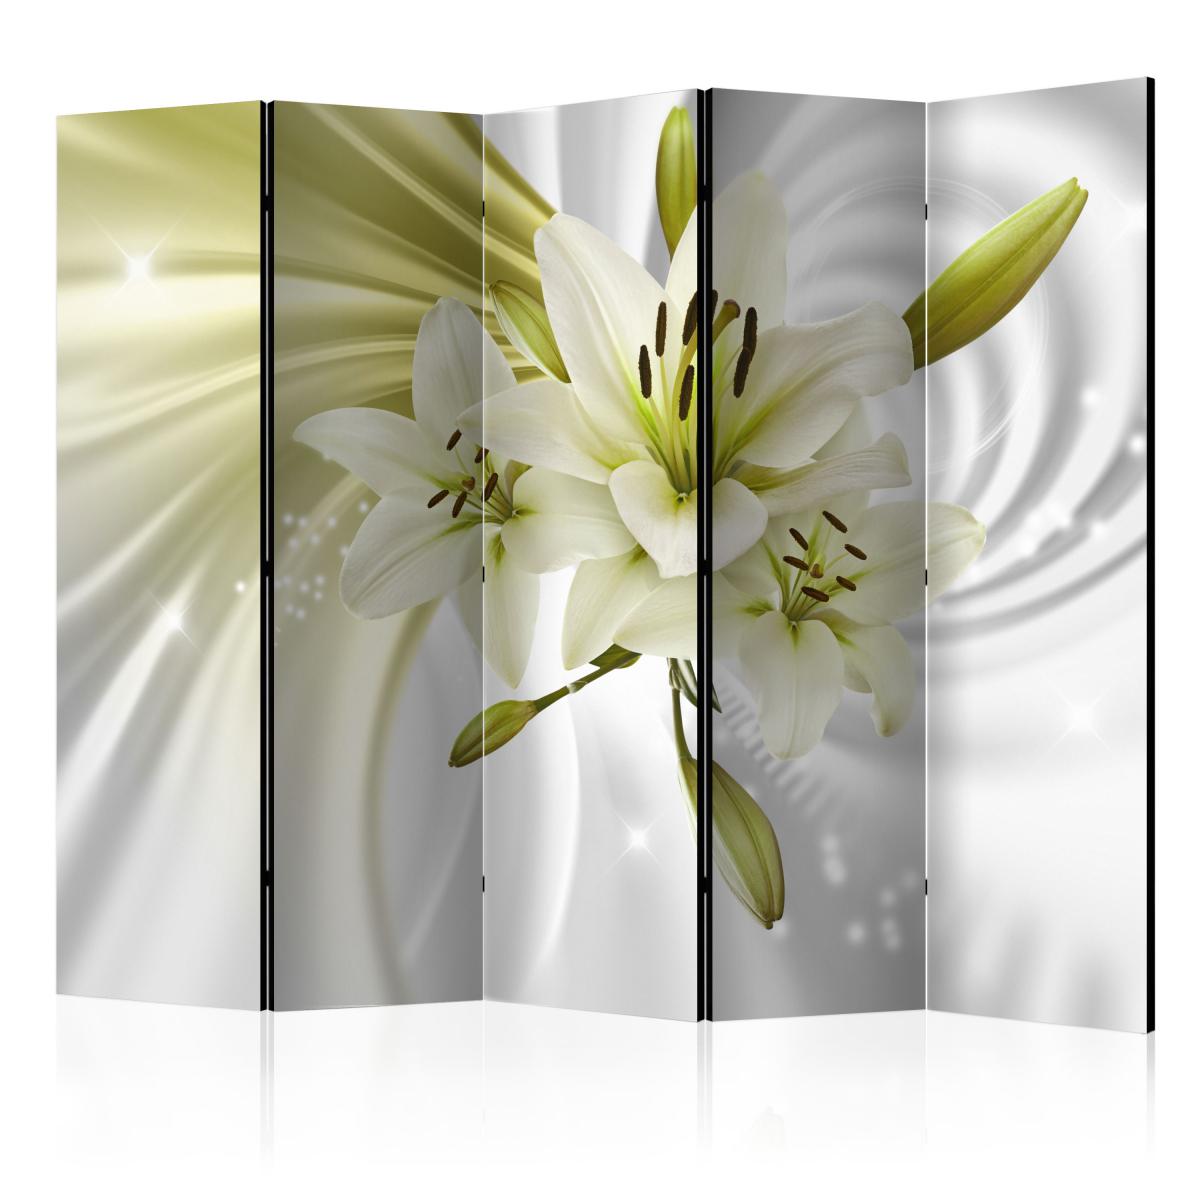 Bimago - Paravent 5 volets - Green Captivation II [Room Dividers] - Décoration, image, art | 225x172 cm | XL - Grand Format | - Cloisons